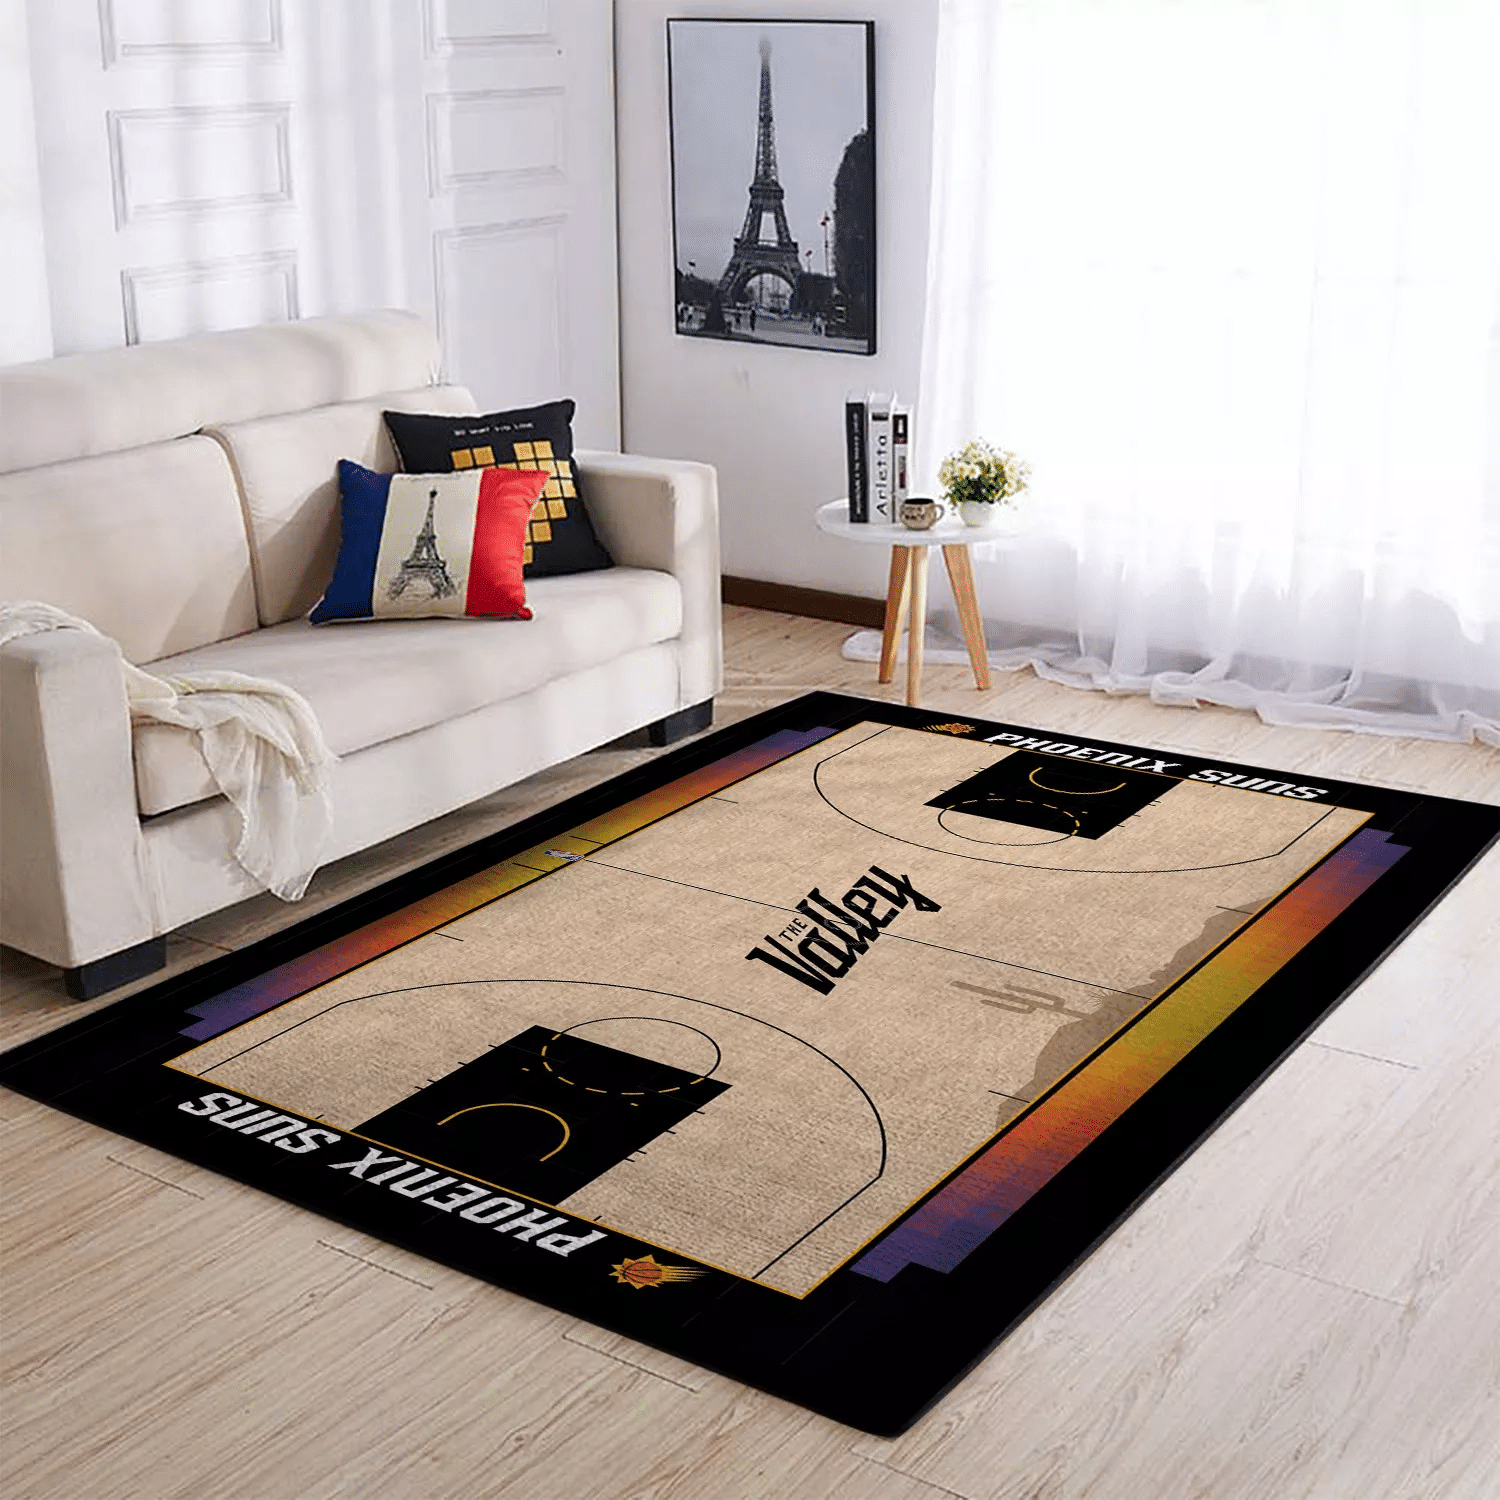 Nba phoenix suns edition carpet rug 01259  rug